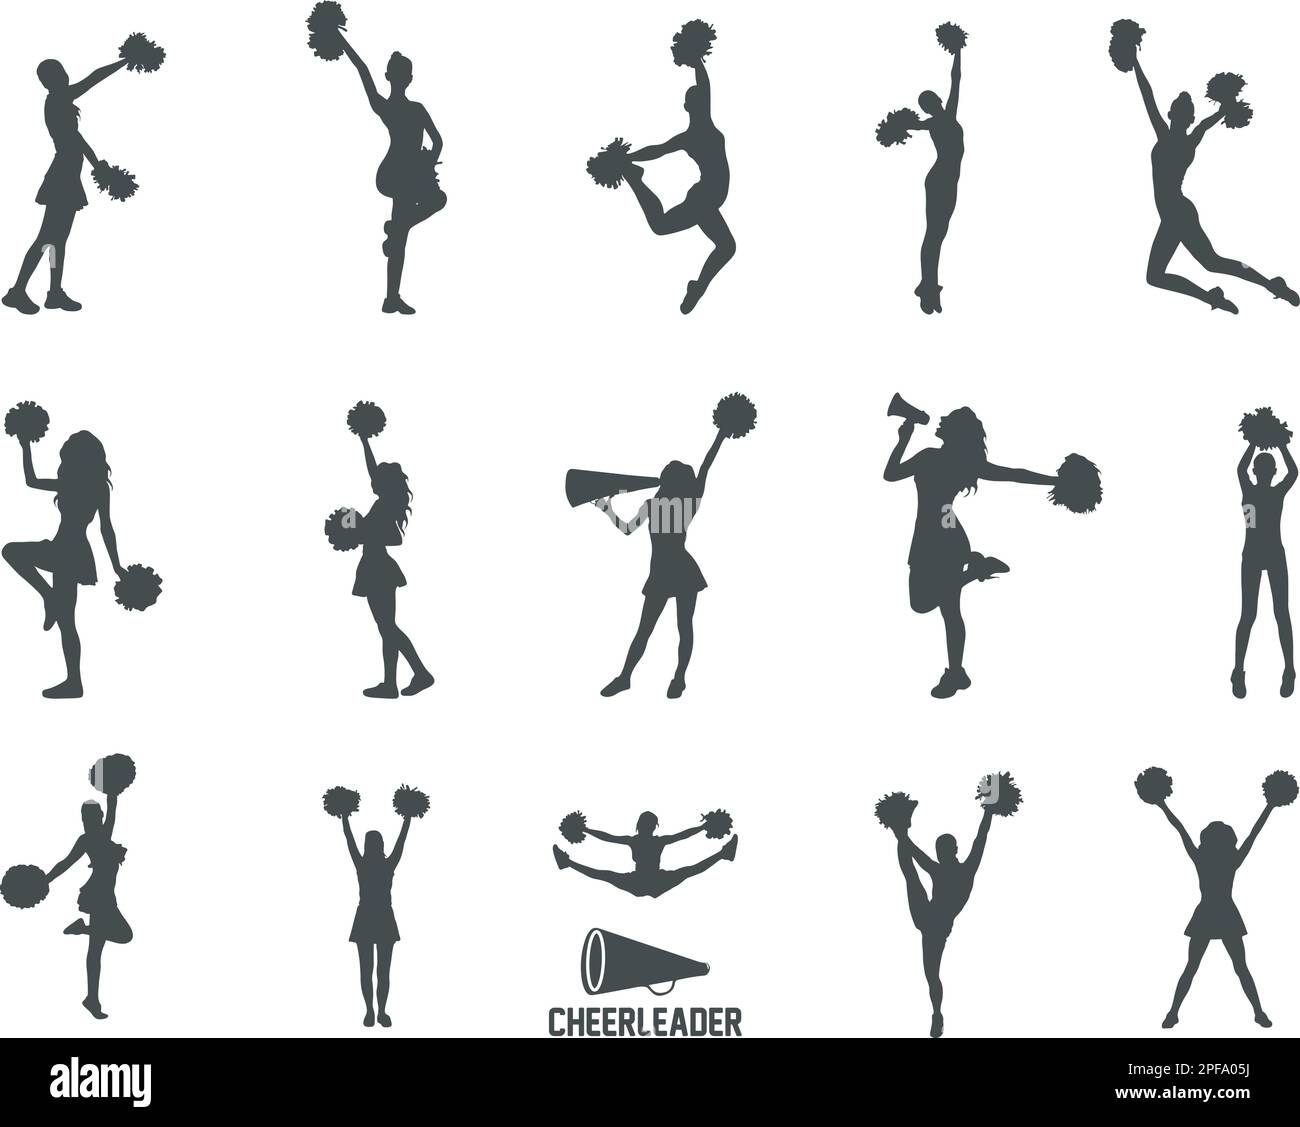 Cheerleader silhouette, Cheerleader SVG Cut Files, Cheer Svg, Cheer Girls Silhouette Bundle, Cheerleader silhouettes, Cheerleader girl vector Stock Vector